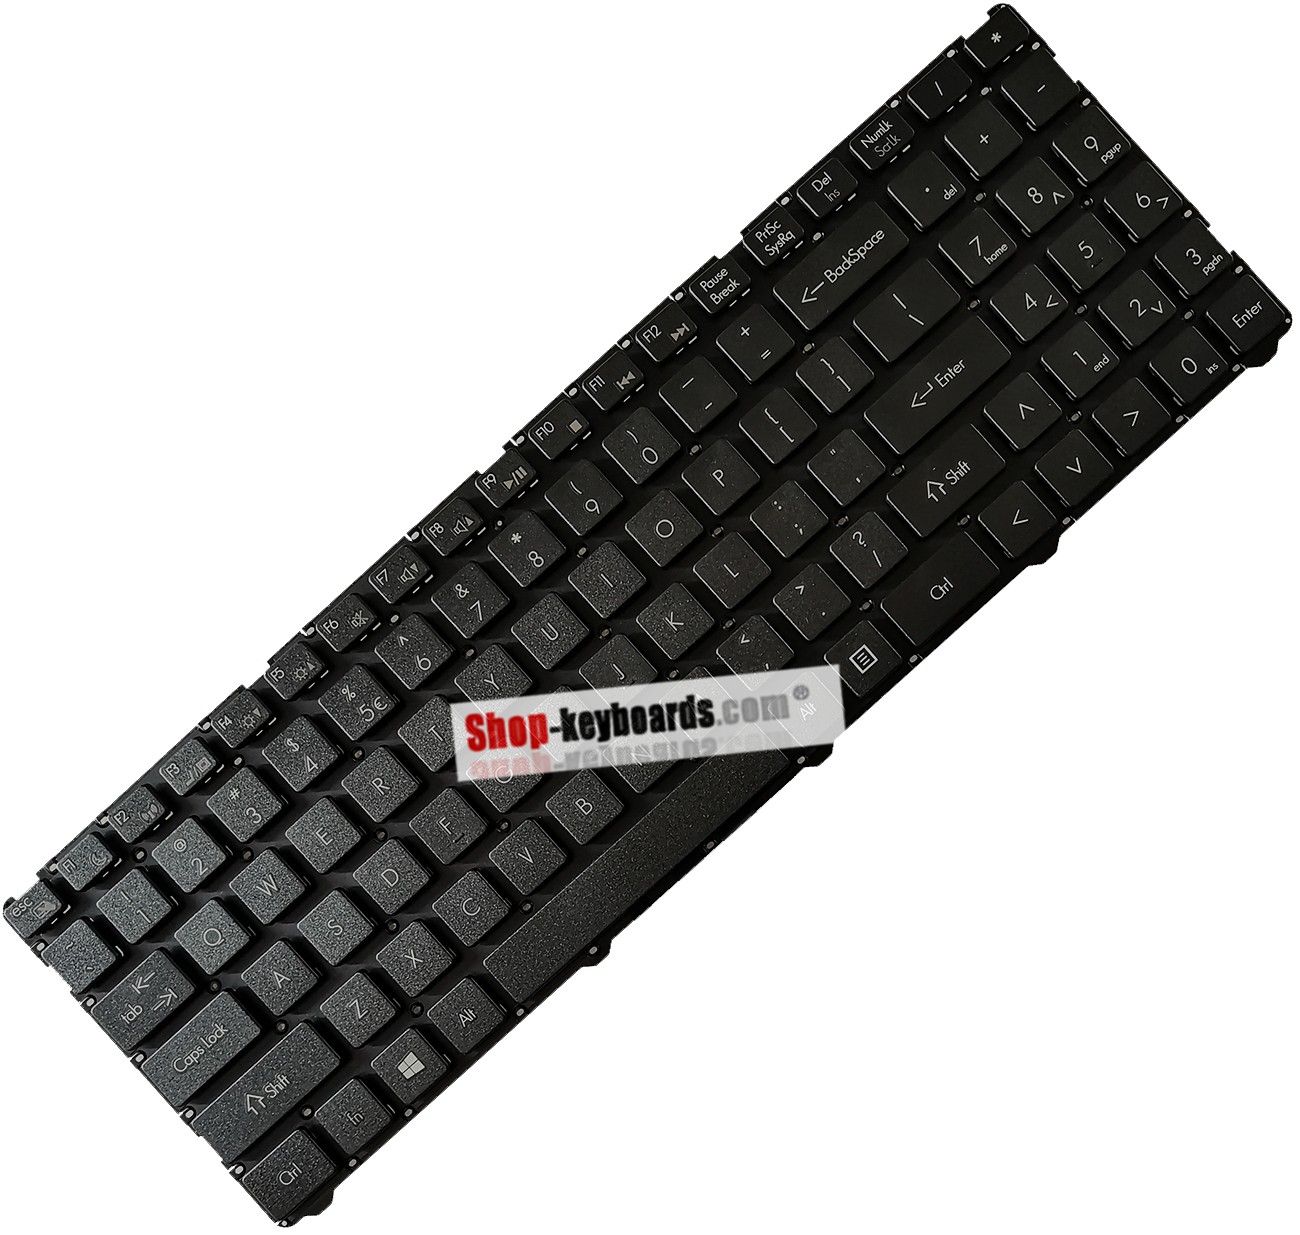 LG MP-12K73US-9207 Keyboard replacement